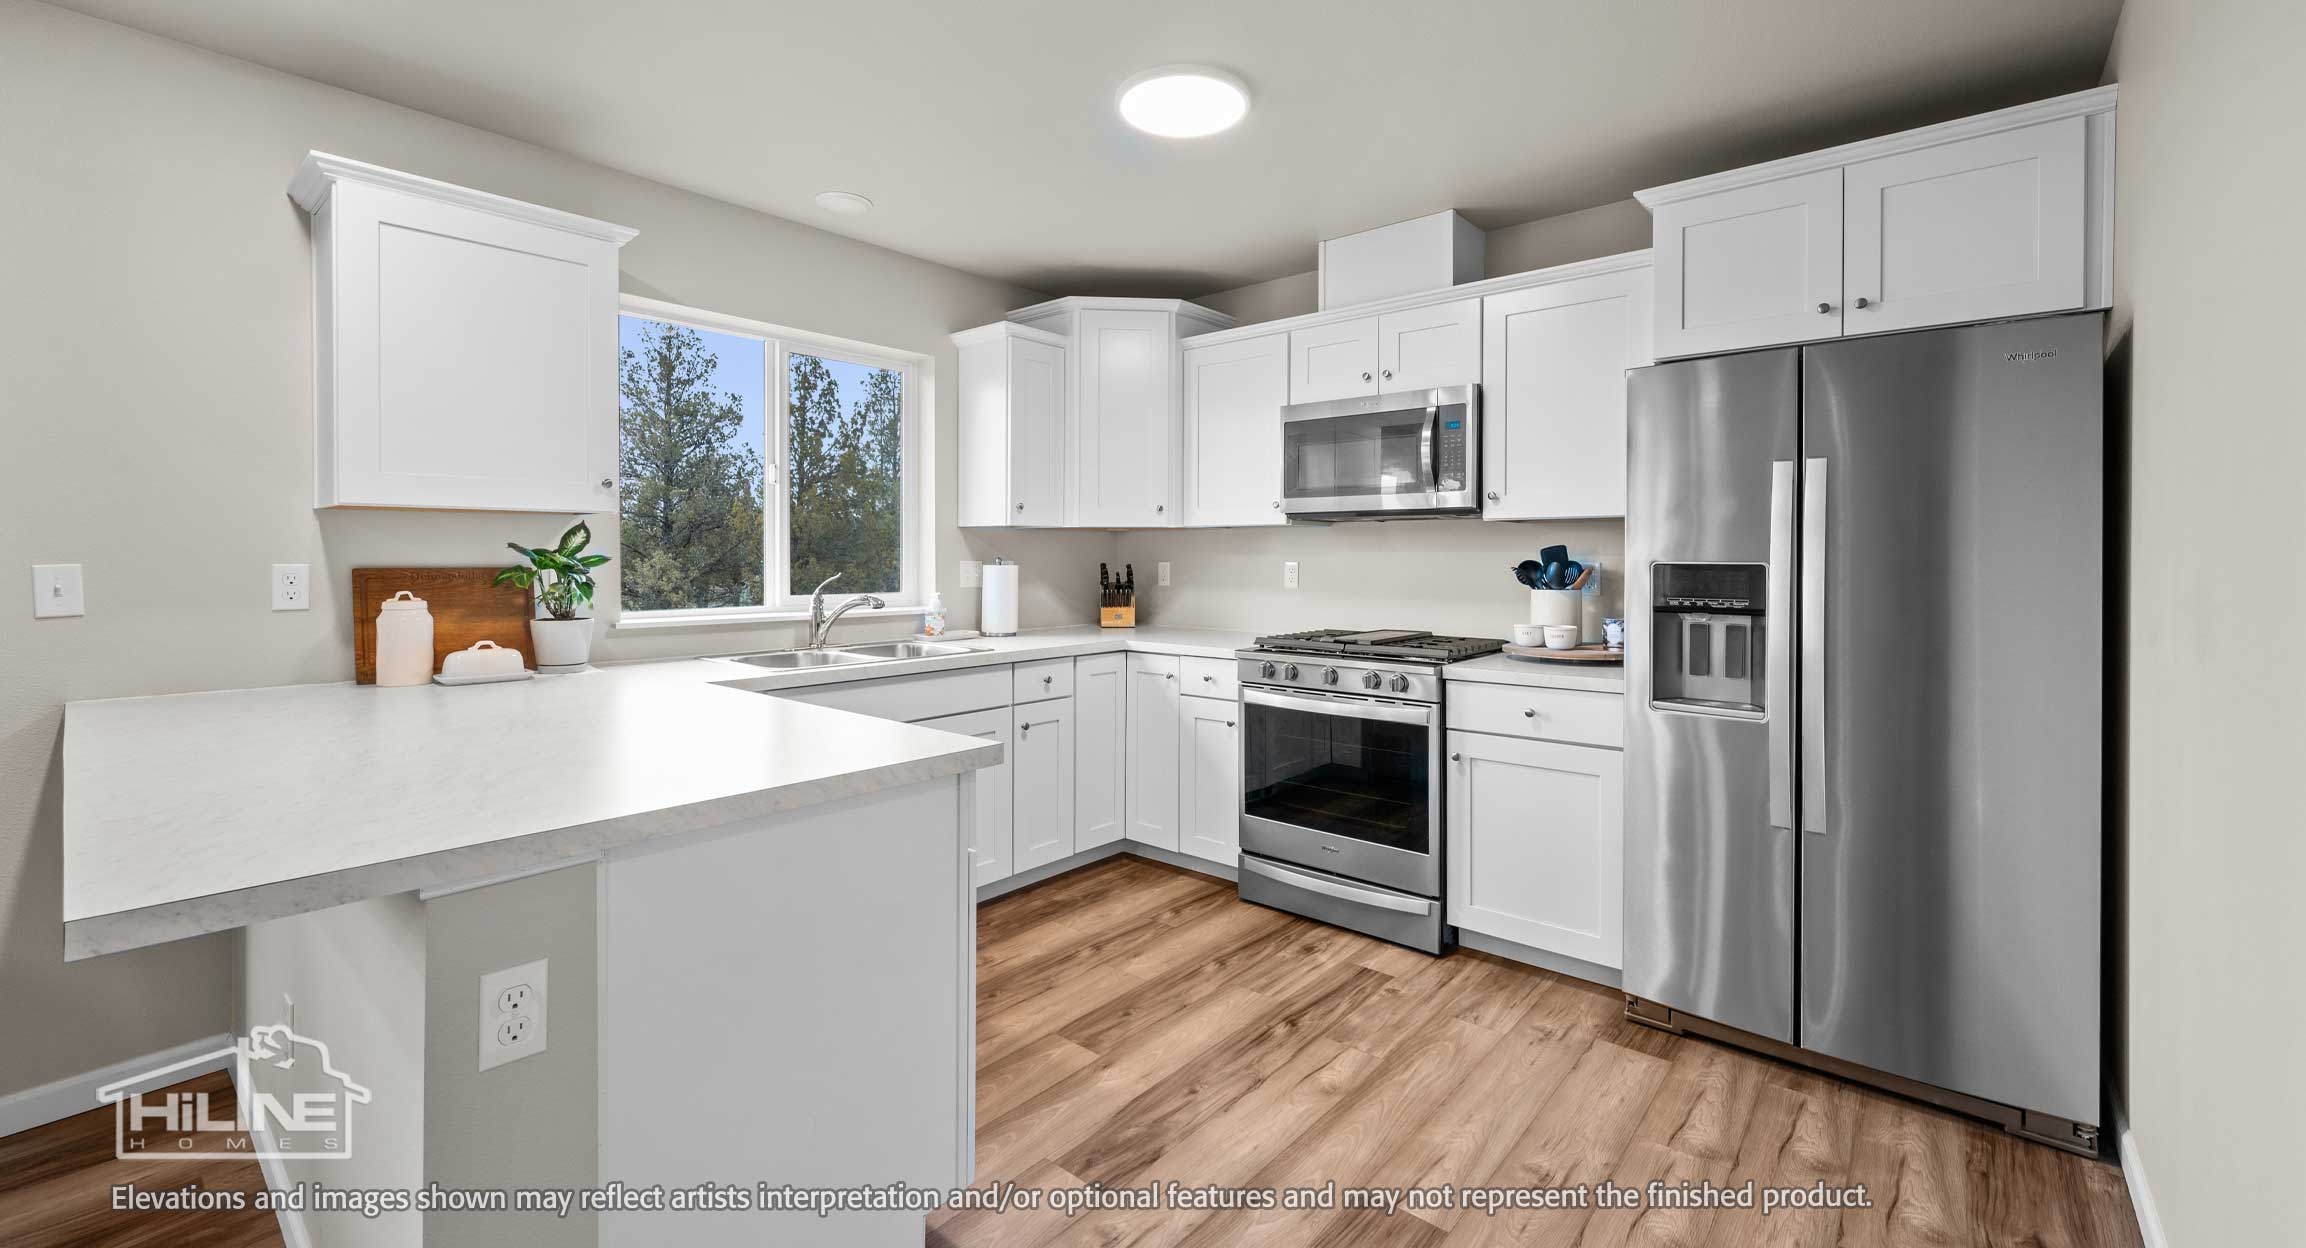 Image of HiLine Homes Plan 936 Kitchen.